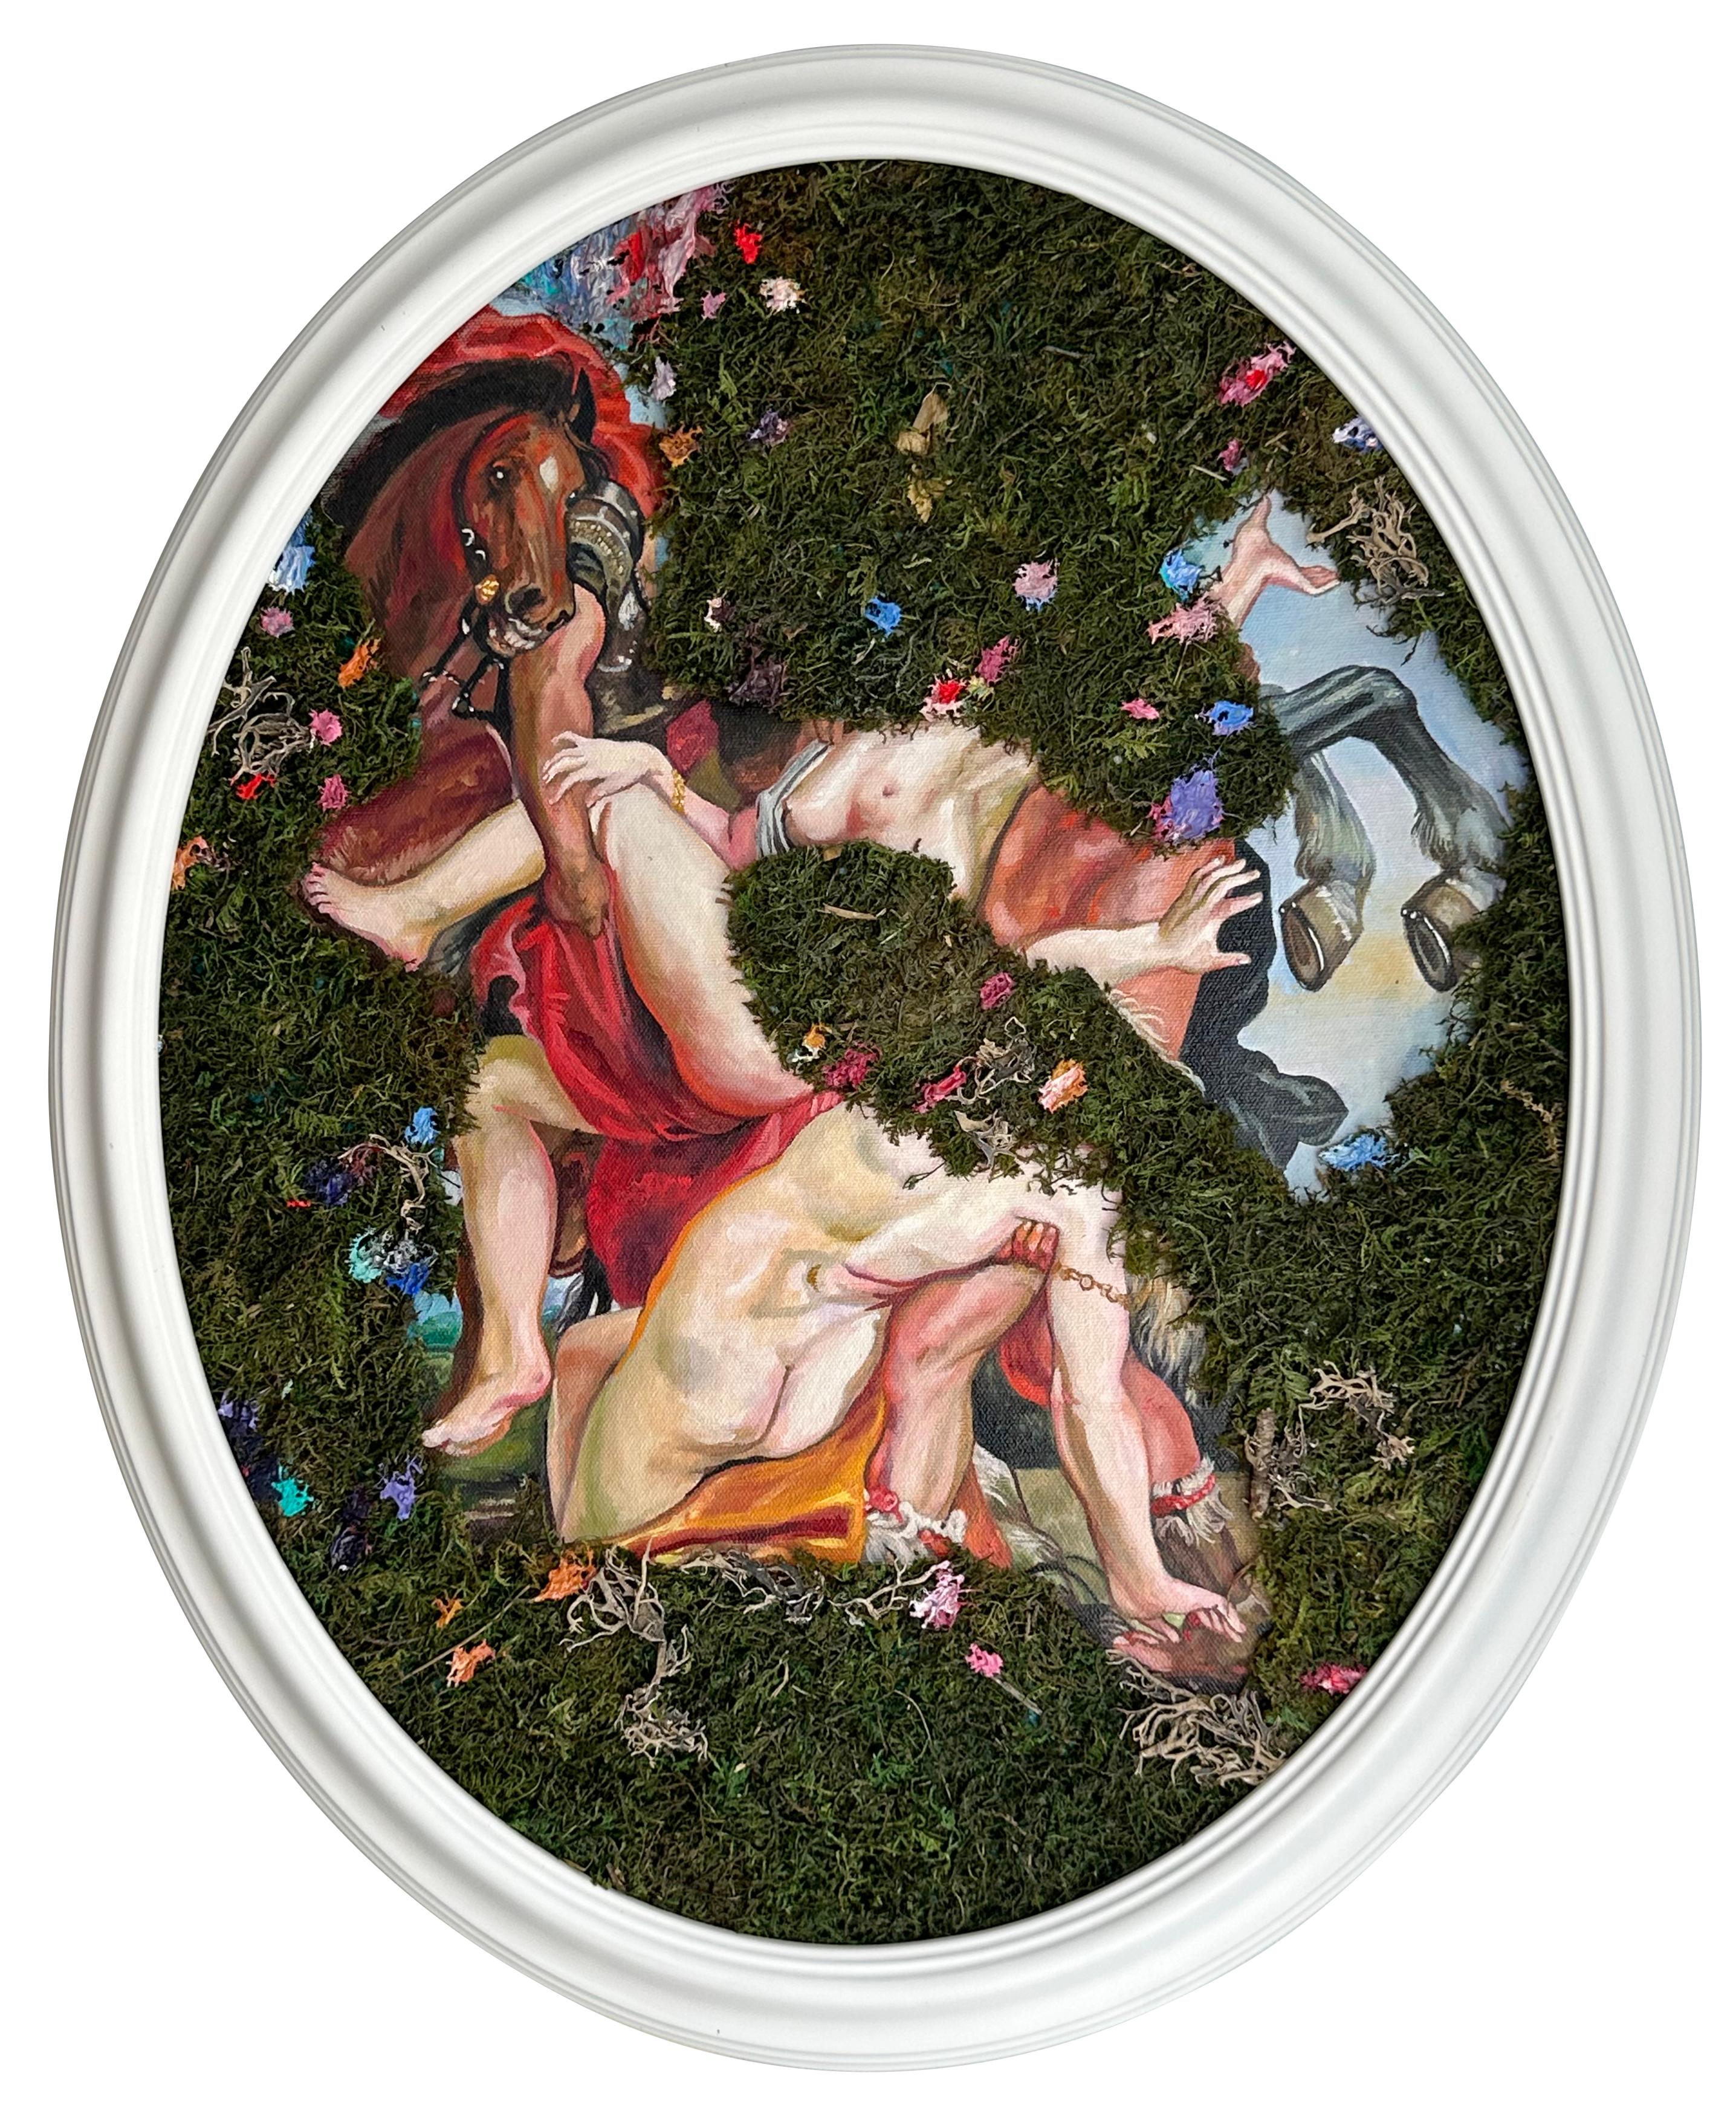 Lady Lichen 2: After the Rape - Art by Melissa Furness